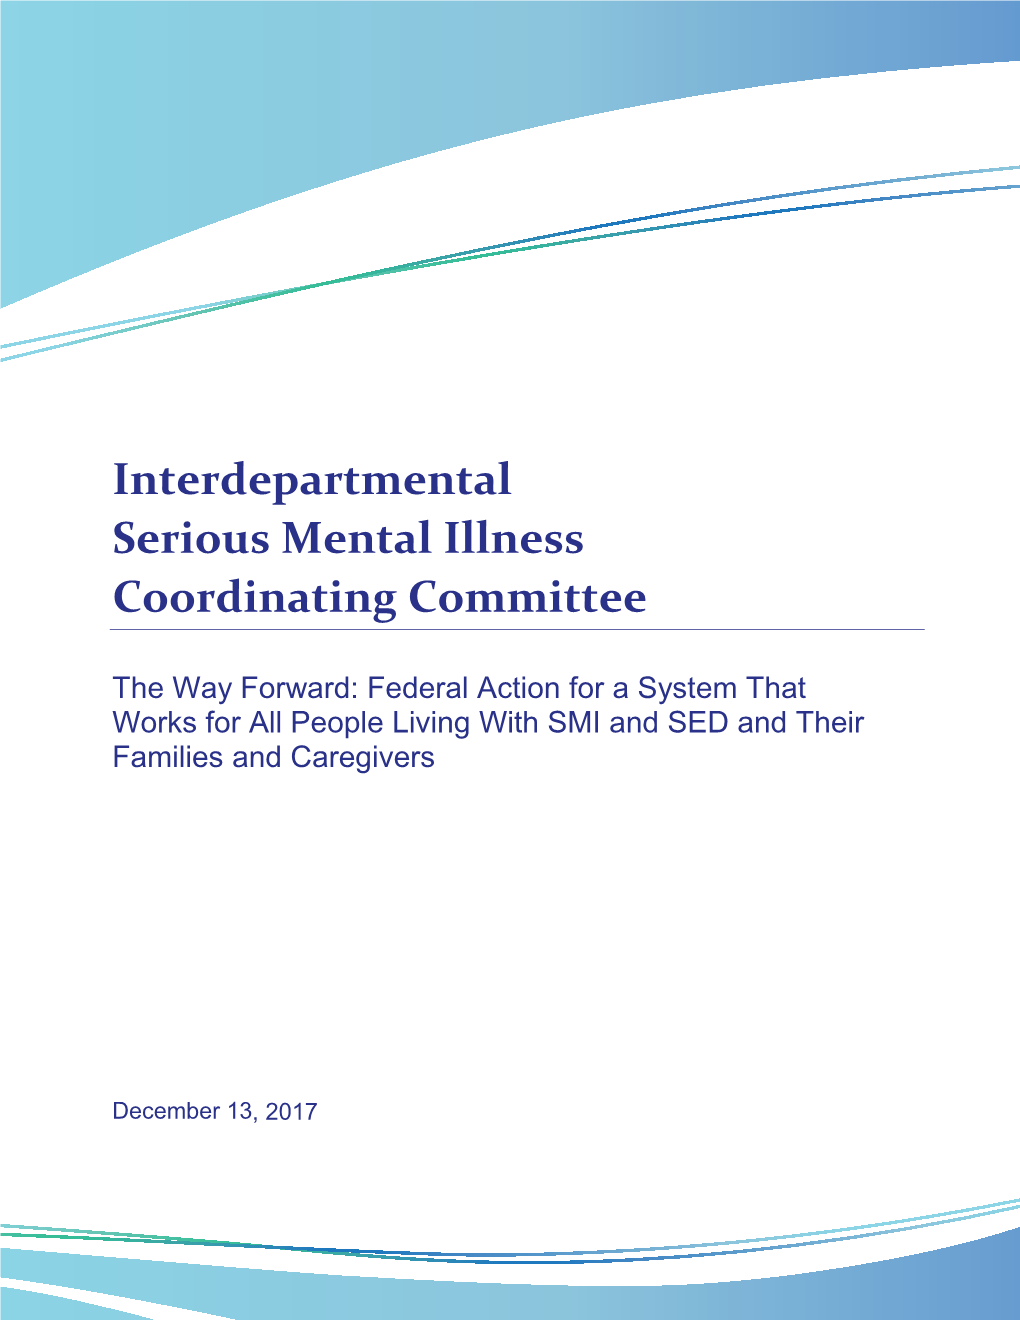 Interdepartmental Serious Mental Illness Coordinating Committee